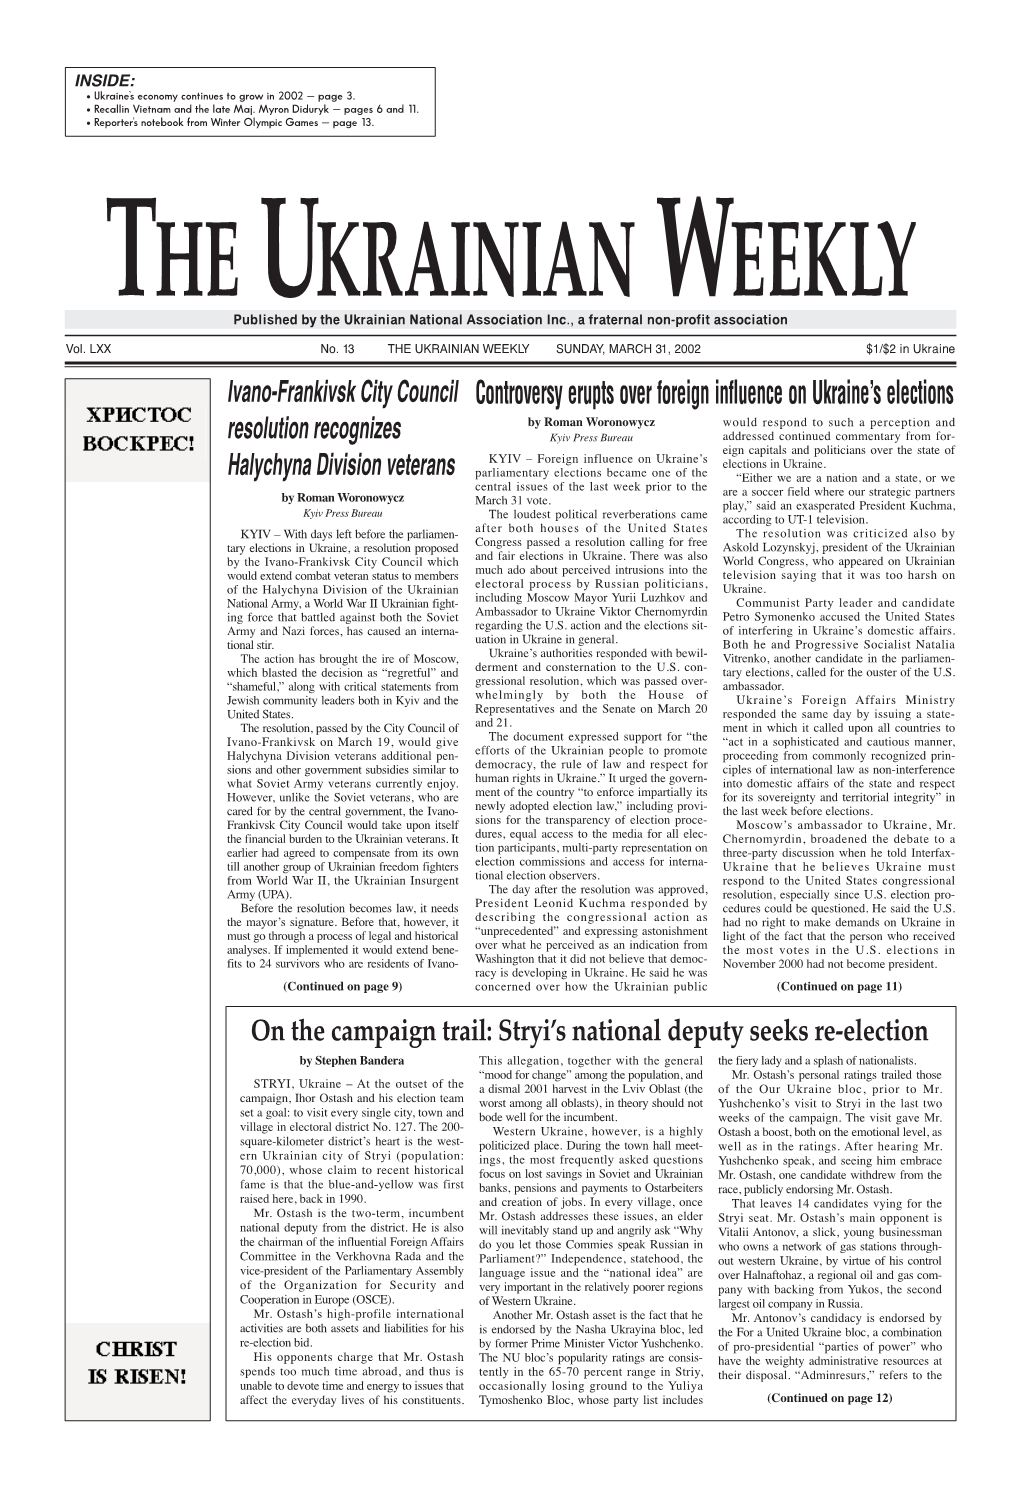 The Ukrainian Weekly 2002, No.13